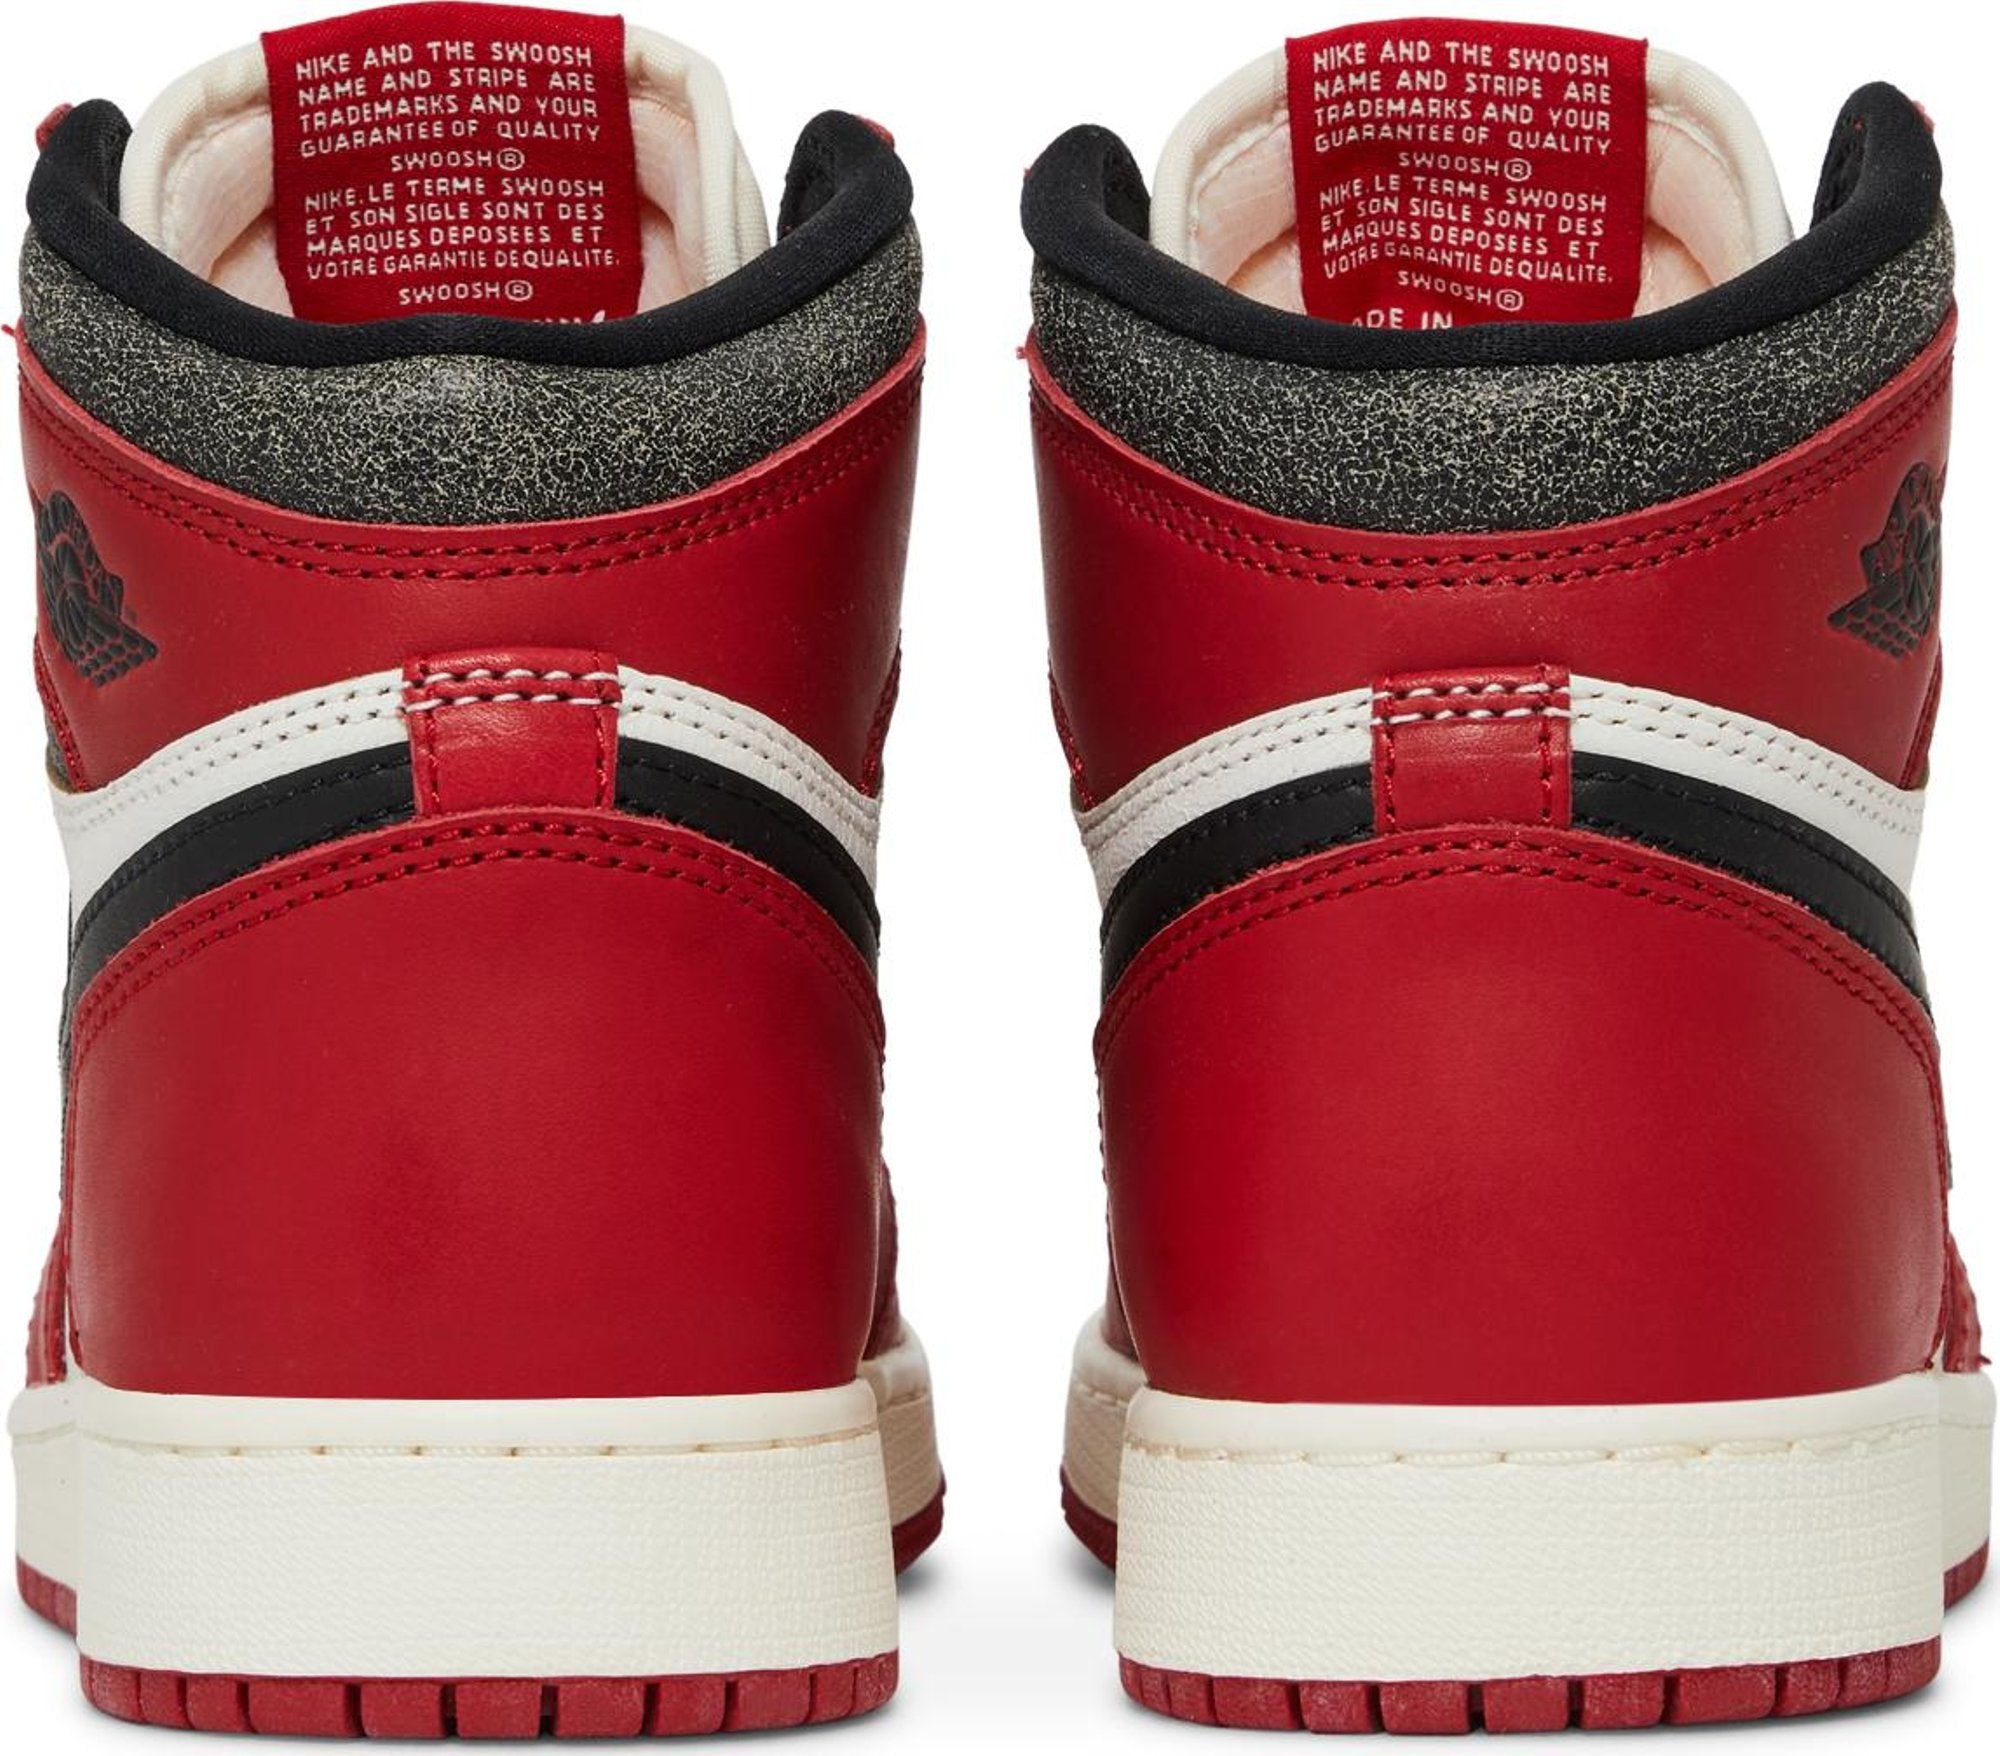 Air Jordan 1 'Chicago' (DZ5485-612) Release Date. Nike SNKRS PH